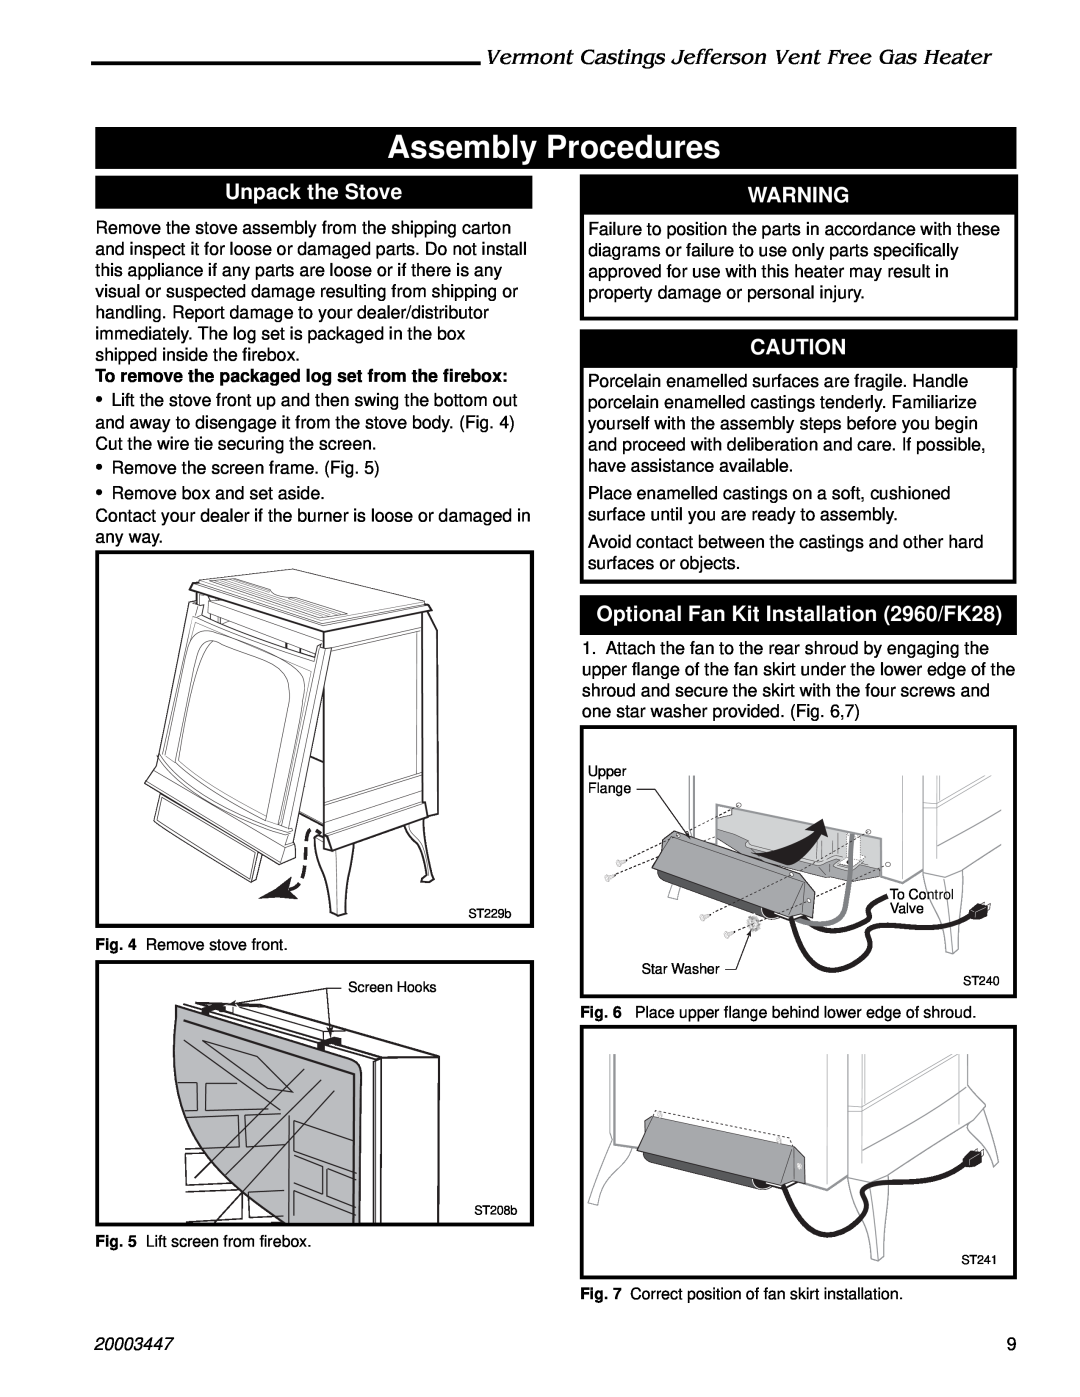 Vermont Casting JUVSR 3096, JUVSM 3096 Assembly Procedures, Unpack the Stove, Optional Fan Kit Installation 2960/FK28 